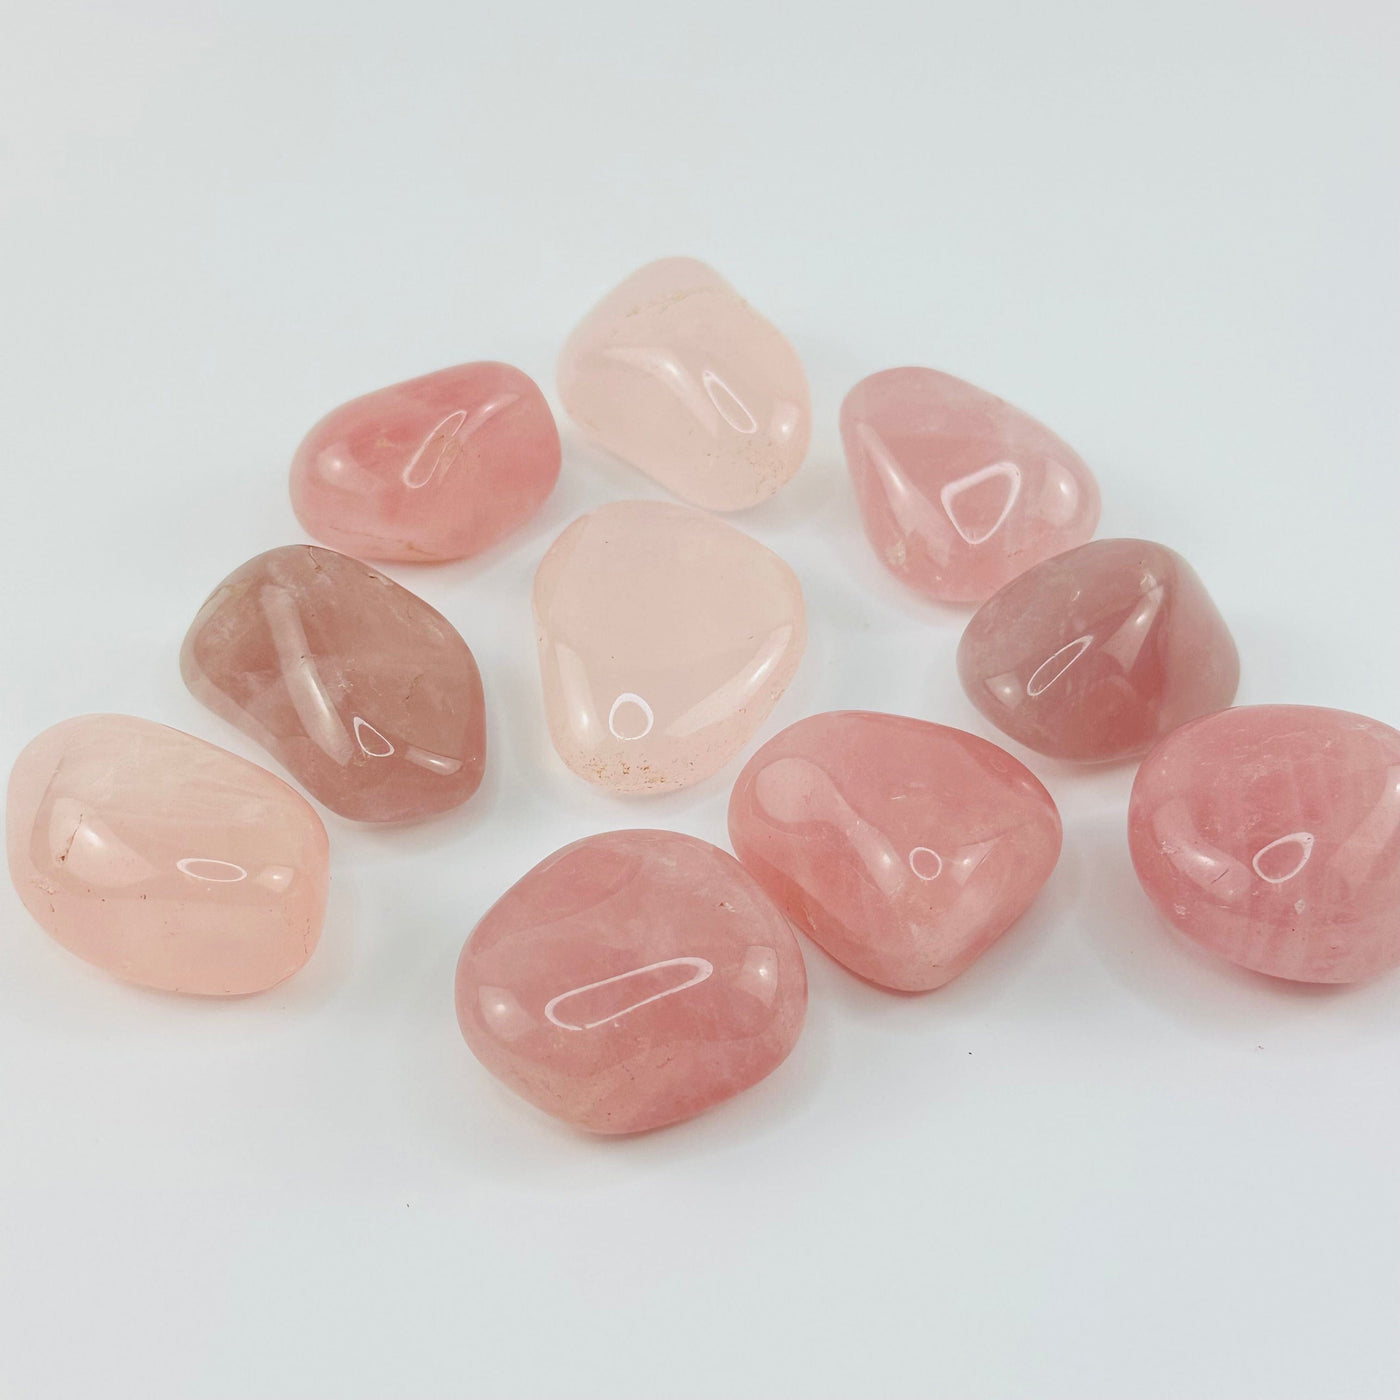 Rose Quartz Extra Quality Tumbled Stone - Choose 1 or 5 pcs 